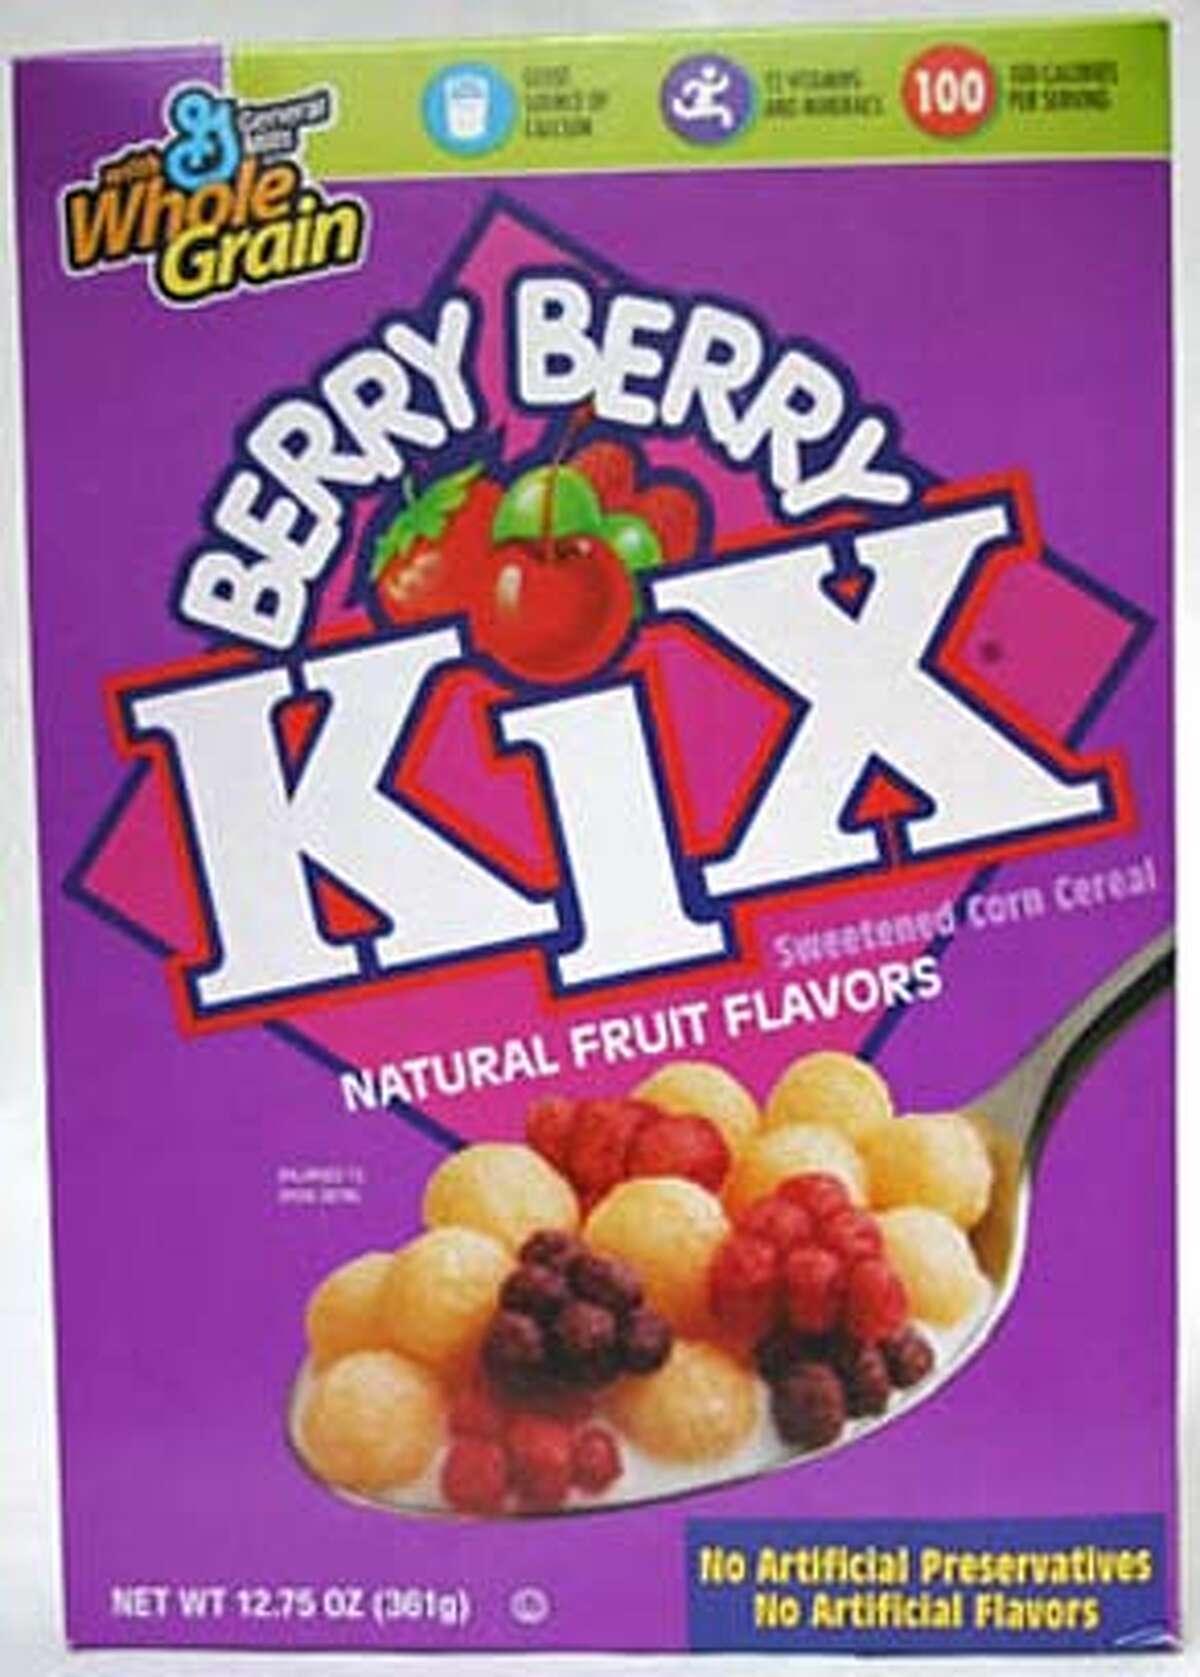 Kix Berry Berry